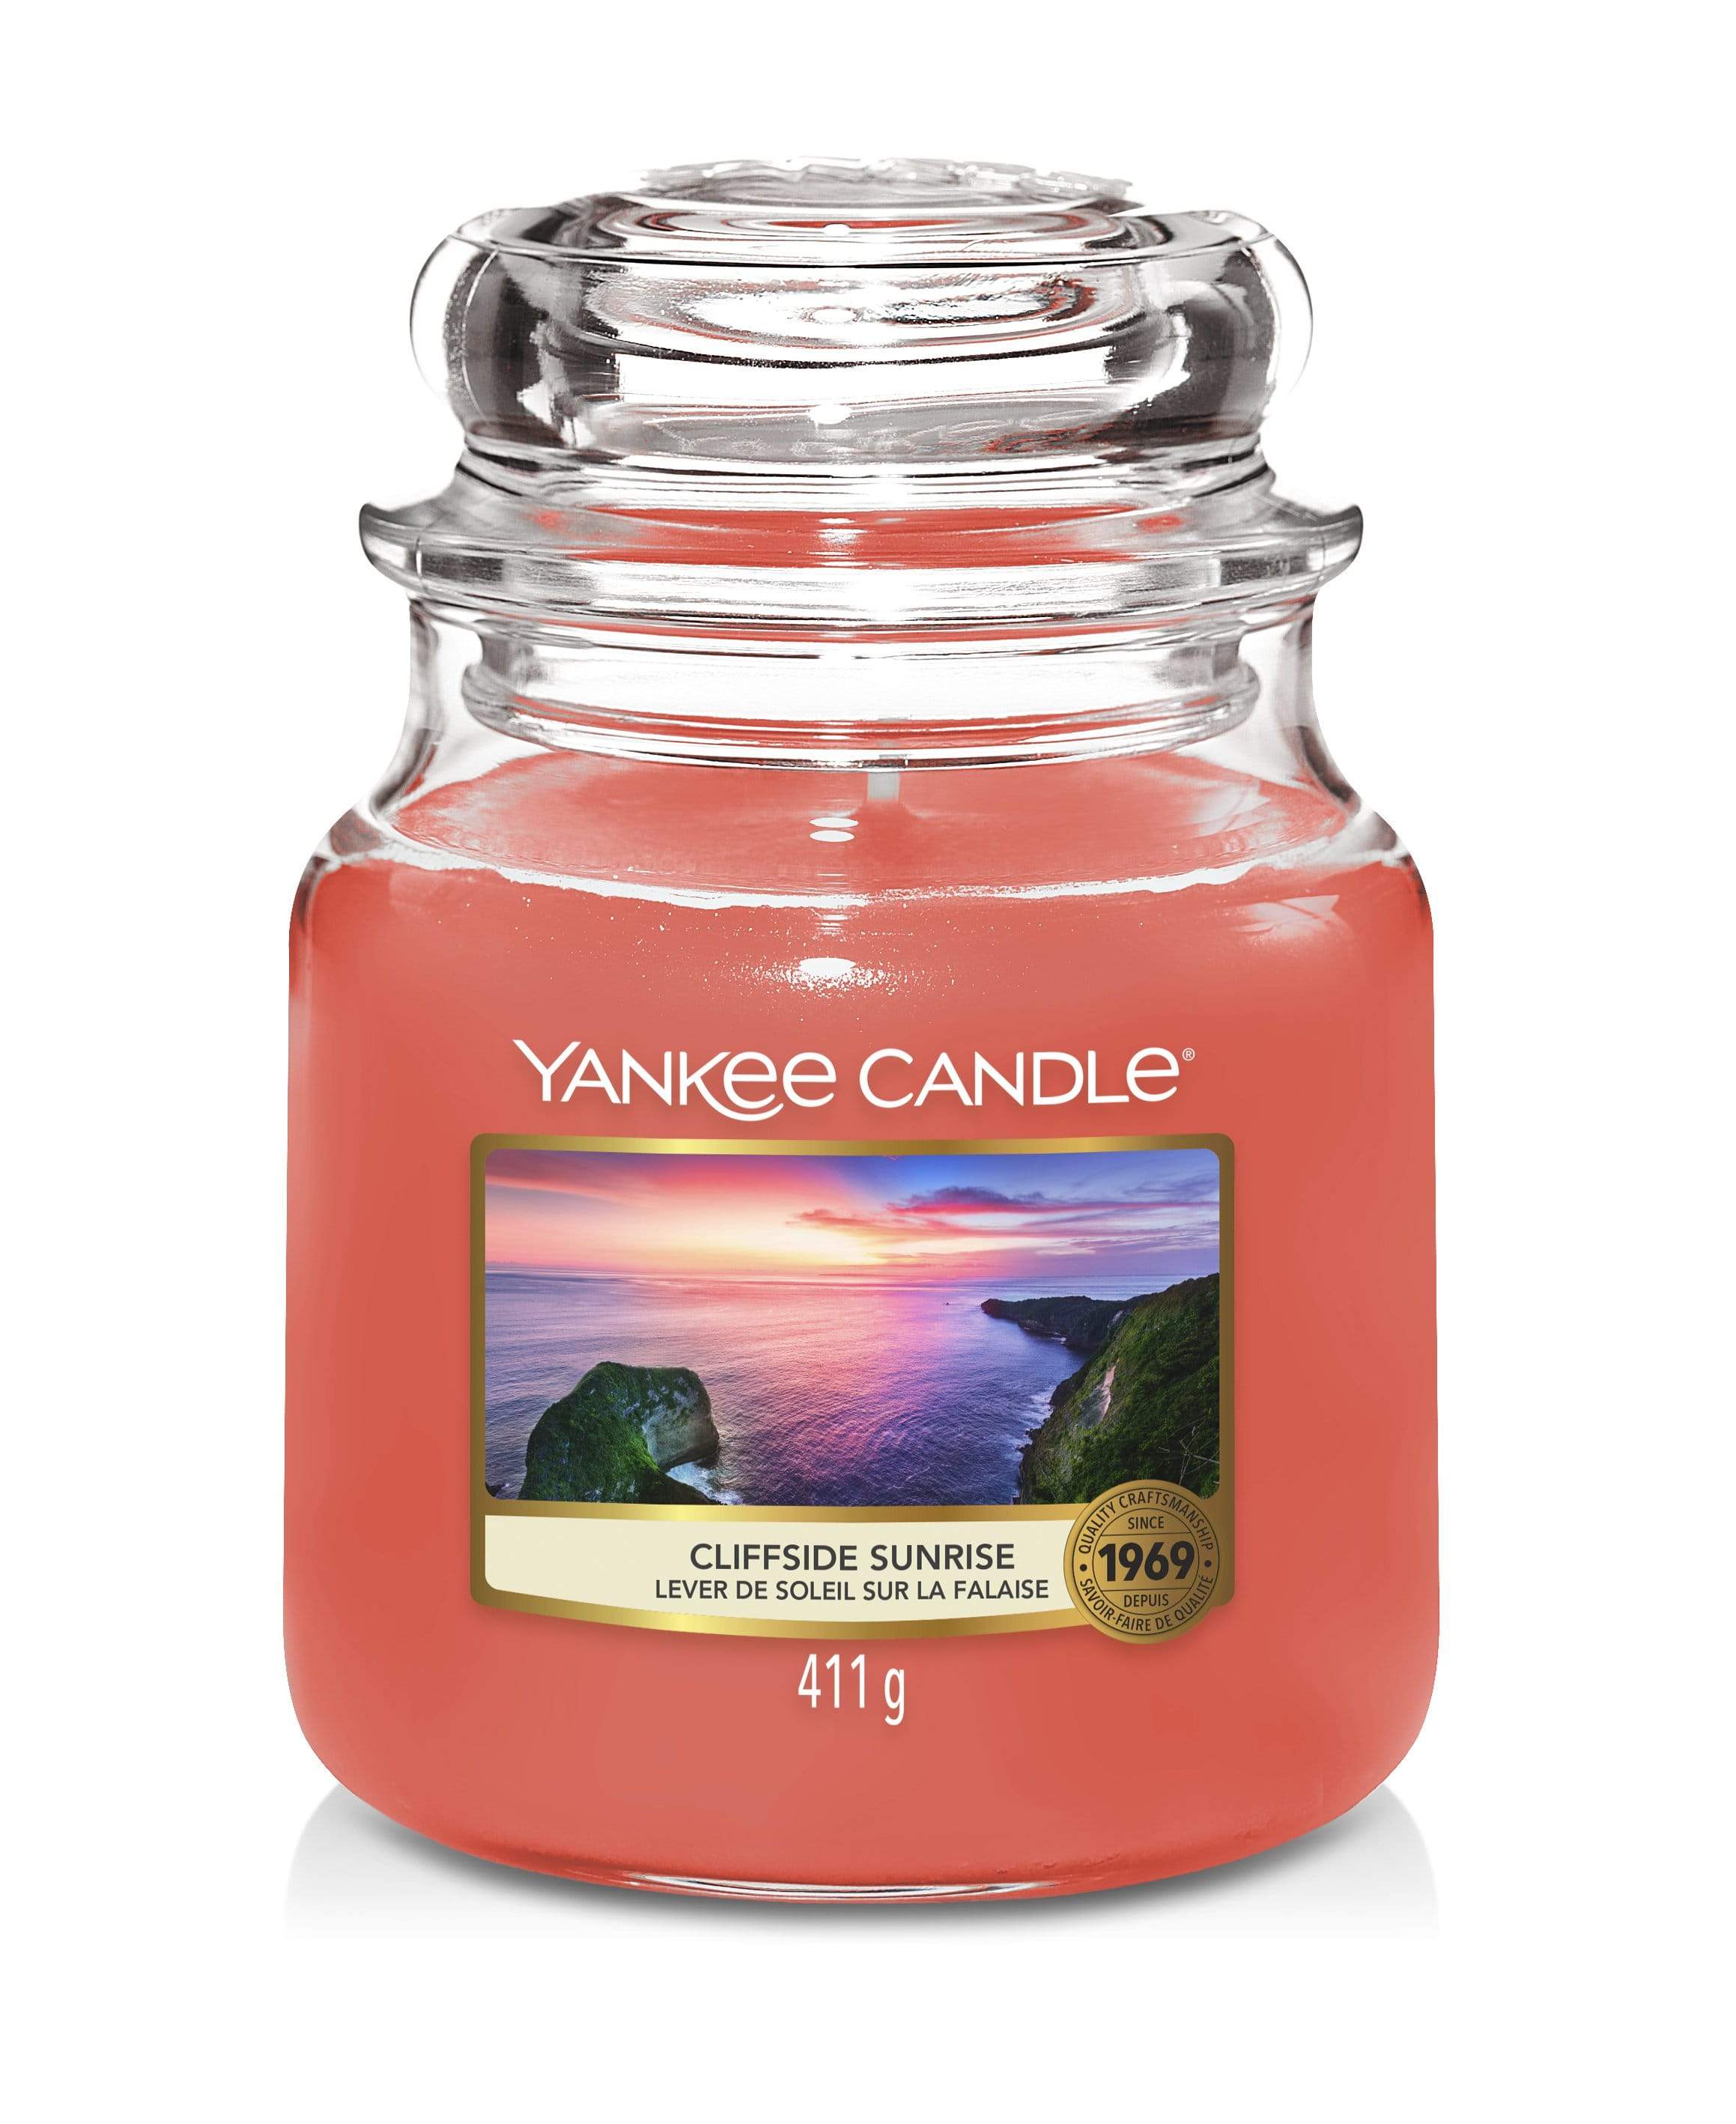 Yankee Candle Medium Jar Candle Yankee Candle Medium Jar - Cliffside Sunrise